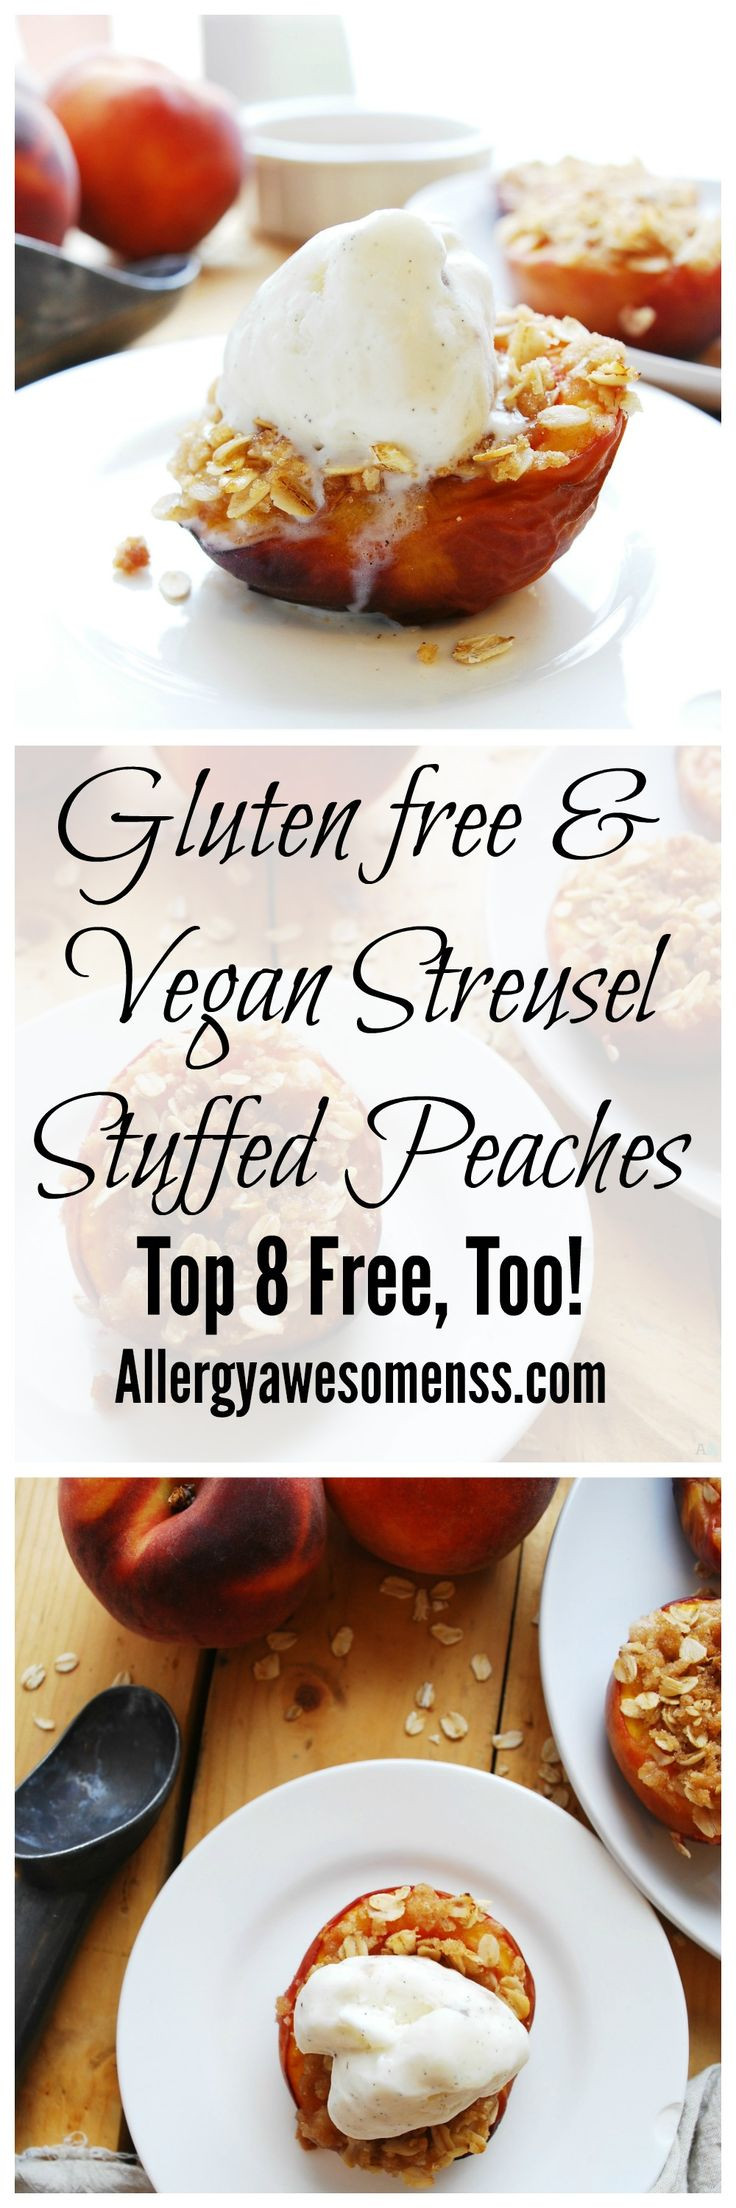 Gluten Free Gourmet Recipes
 STREUSEL STUFFED PEACHES Gluten dairy egg soy peanut